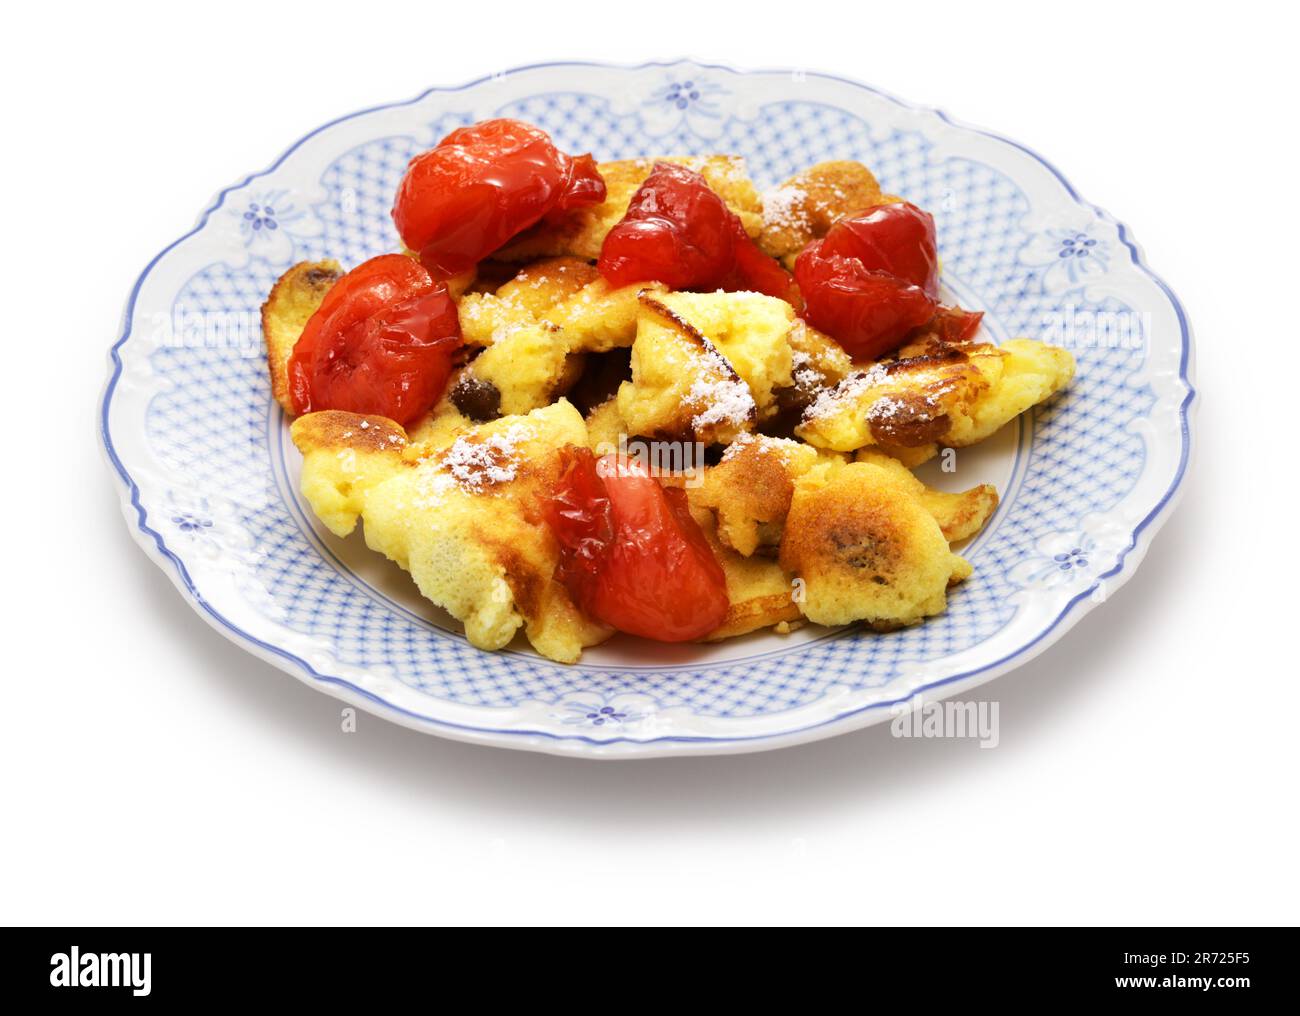 Kaiserschmarren mit Pflaumenkompott, Austrian fluffy scrambled pancake with plum compote Stock Photo